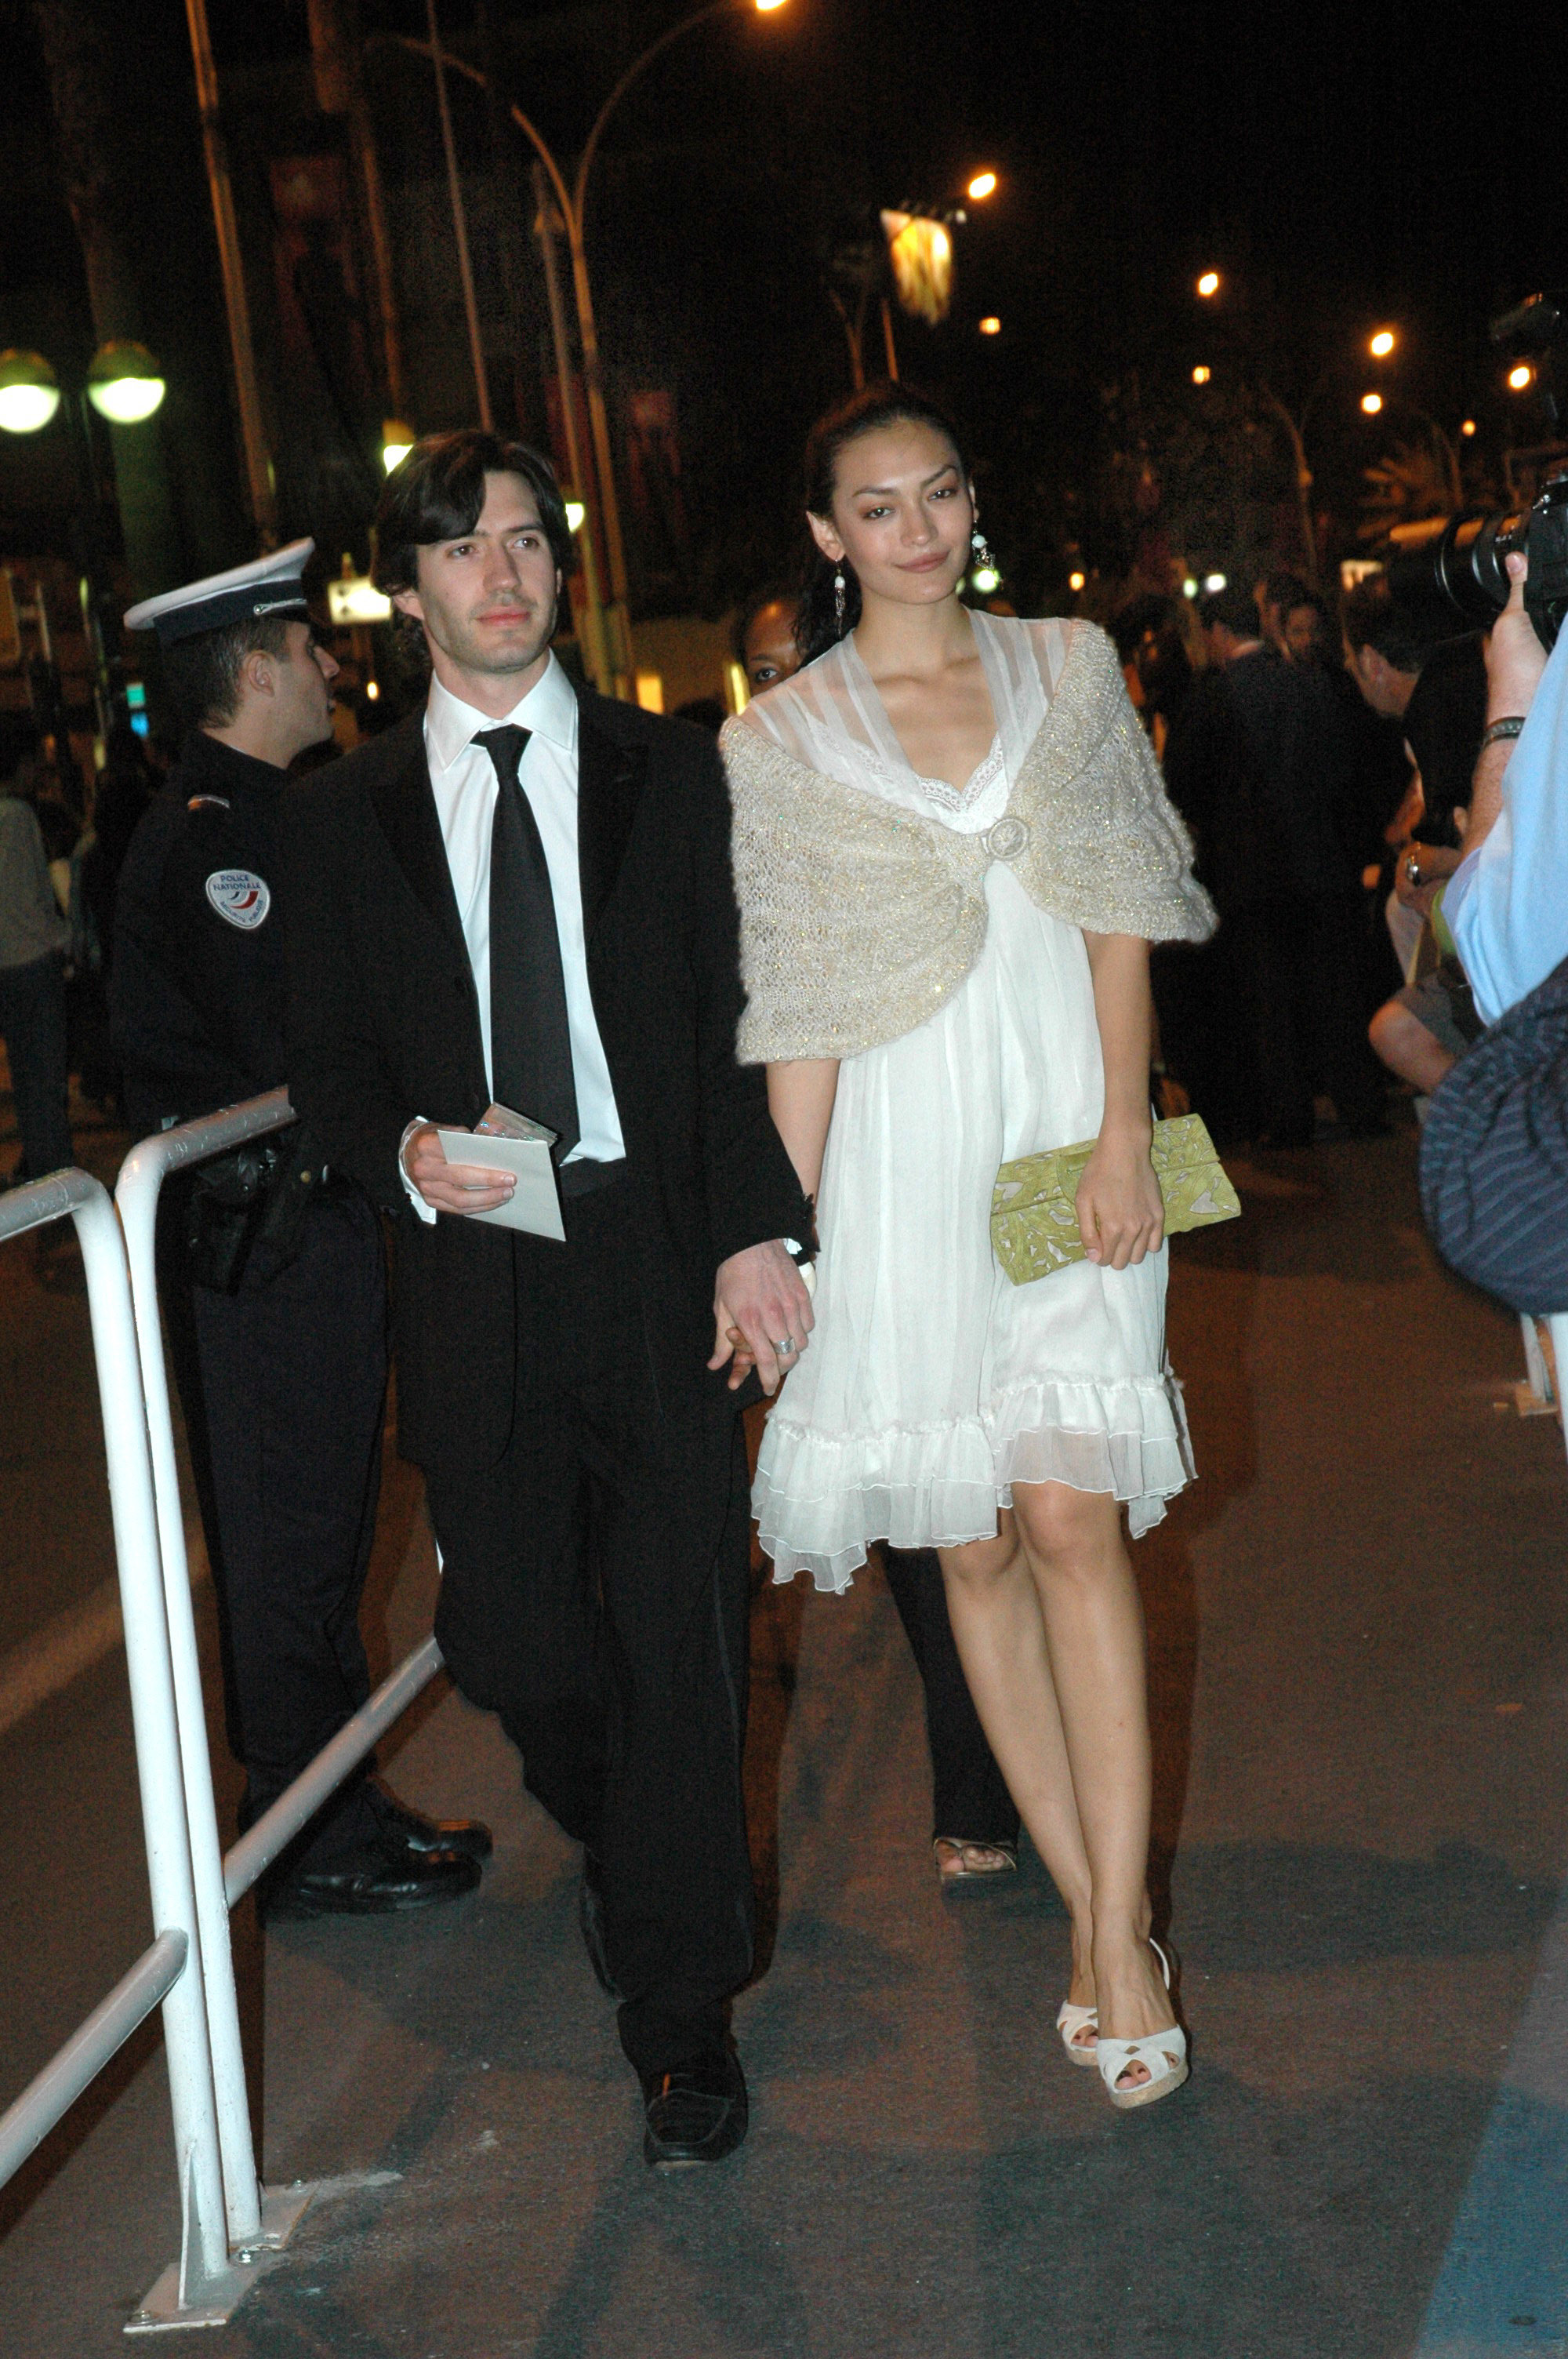 Producer Emanuel Michael and Florence Faivre, 2006 Cannes Film Festival, 